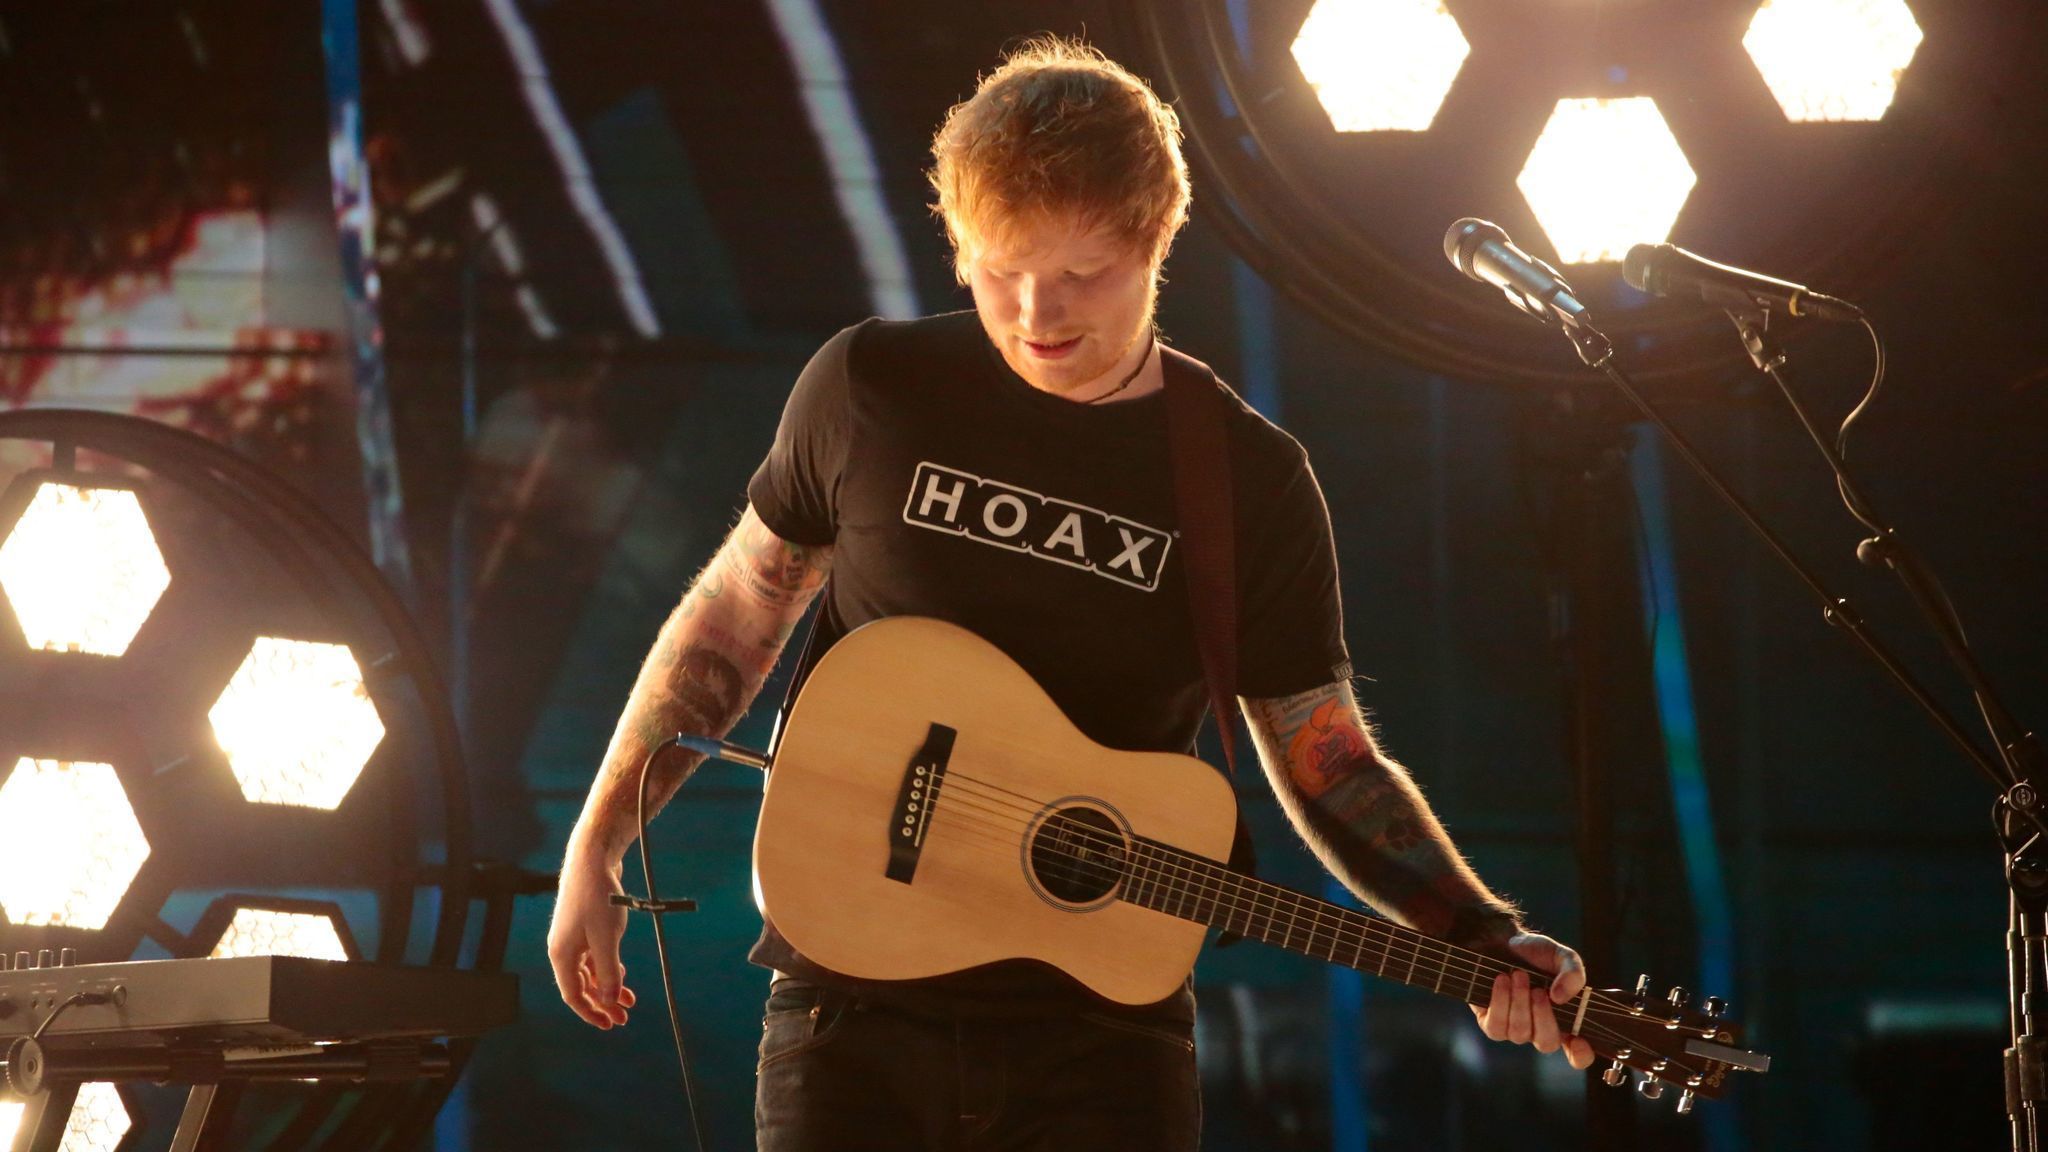 Singer Ed Sheeran illuminates his struggle with substance abuse - LA Times